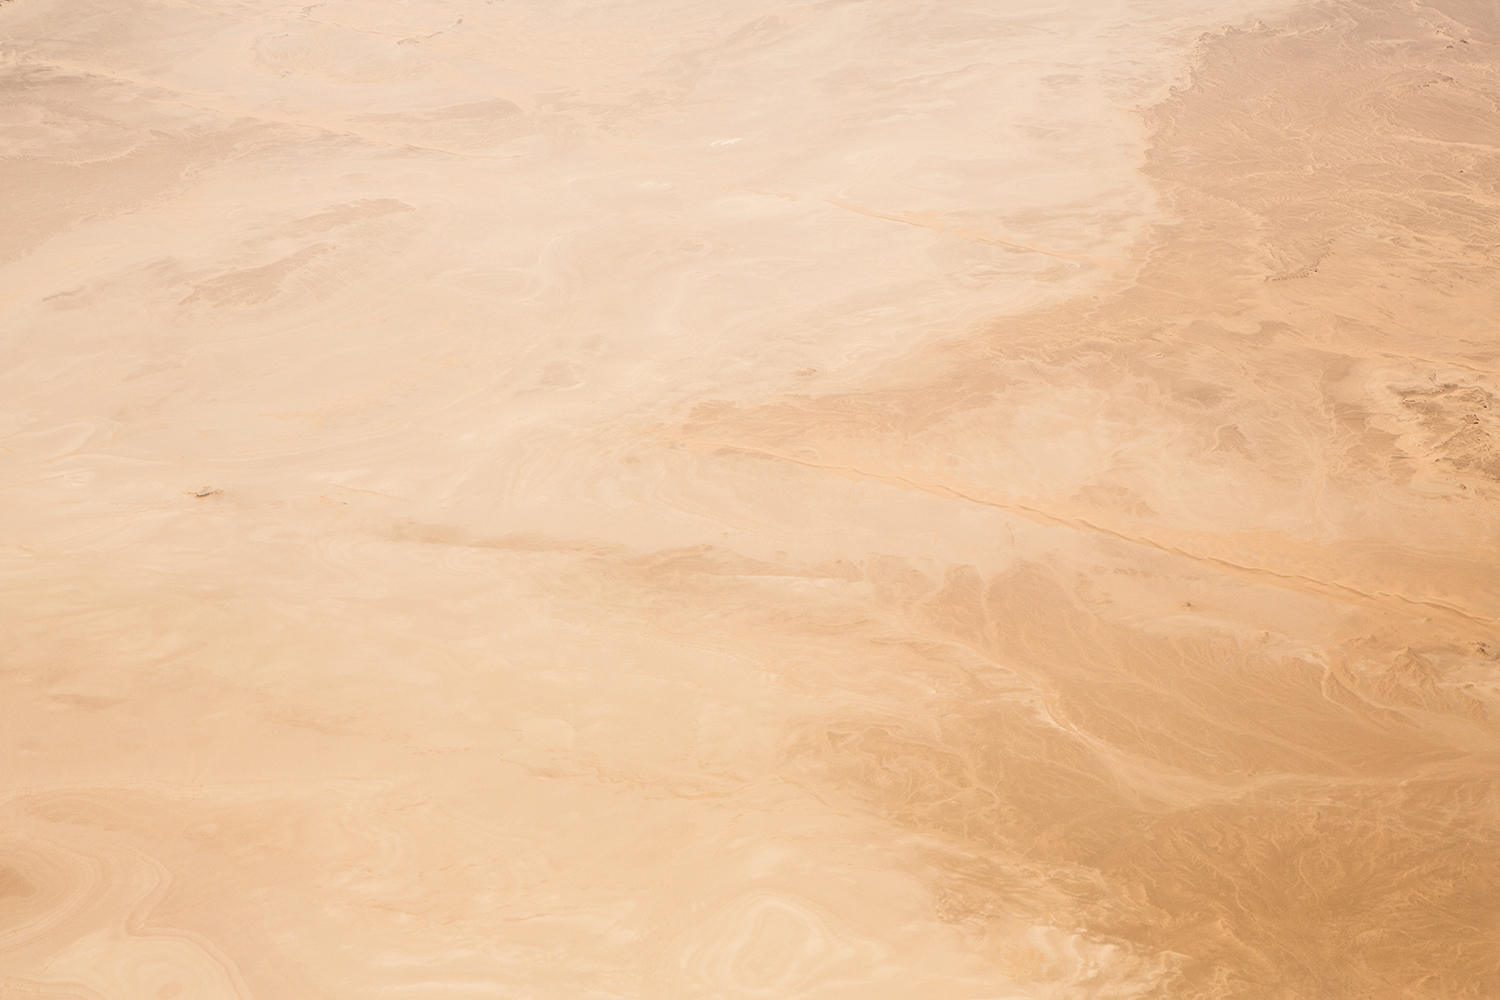  Deserts II, 2015 //  120 cm x 180 cm  